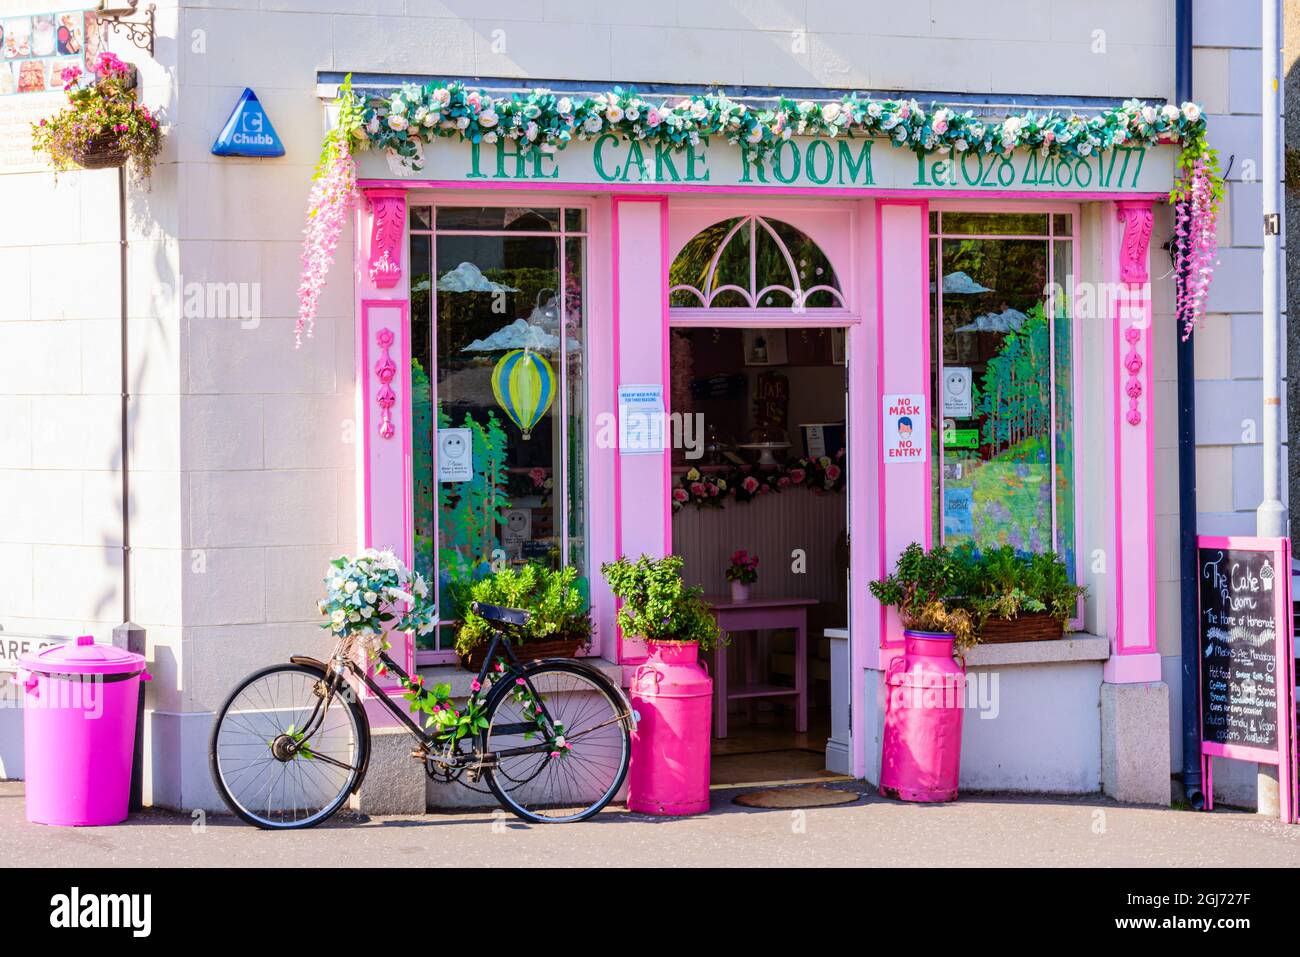 The Cake Room cafe, Strangford, County Down, Northern Ireland, United Kingdom, UK Stock Photo